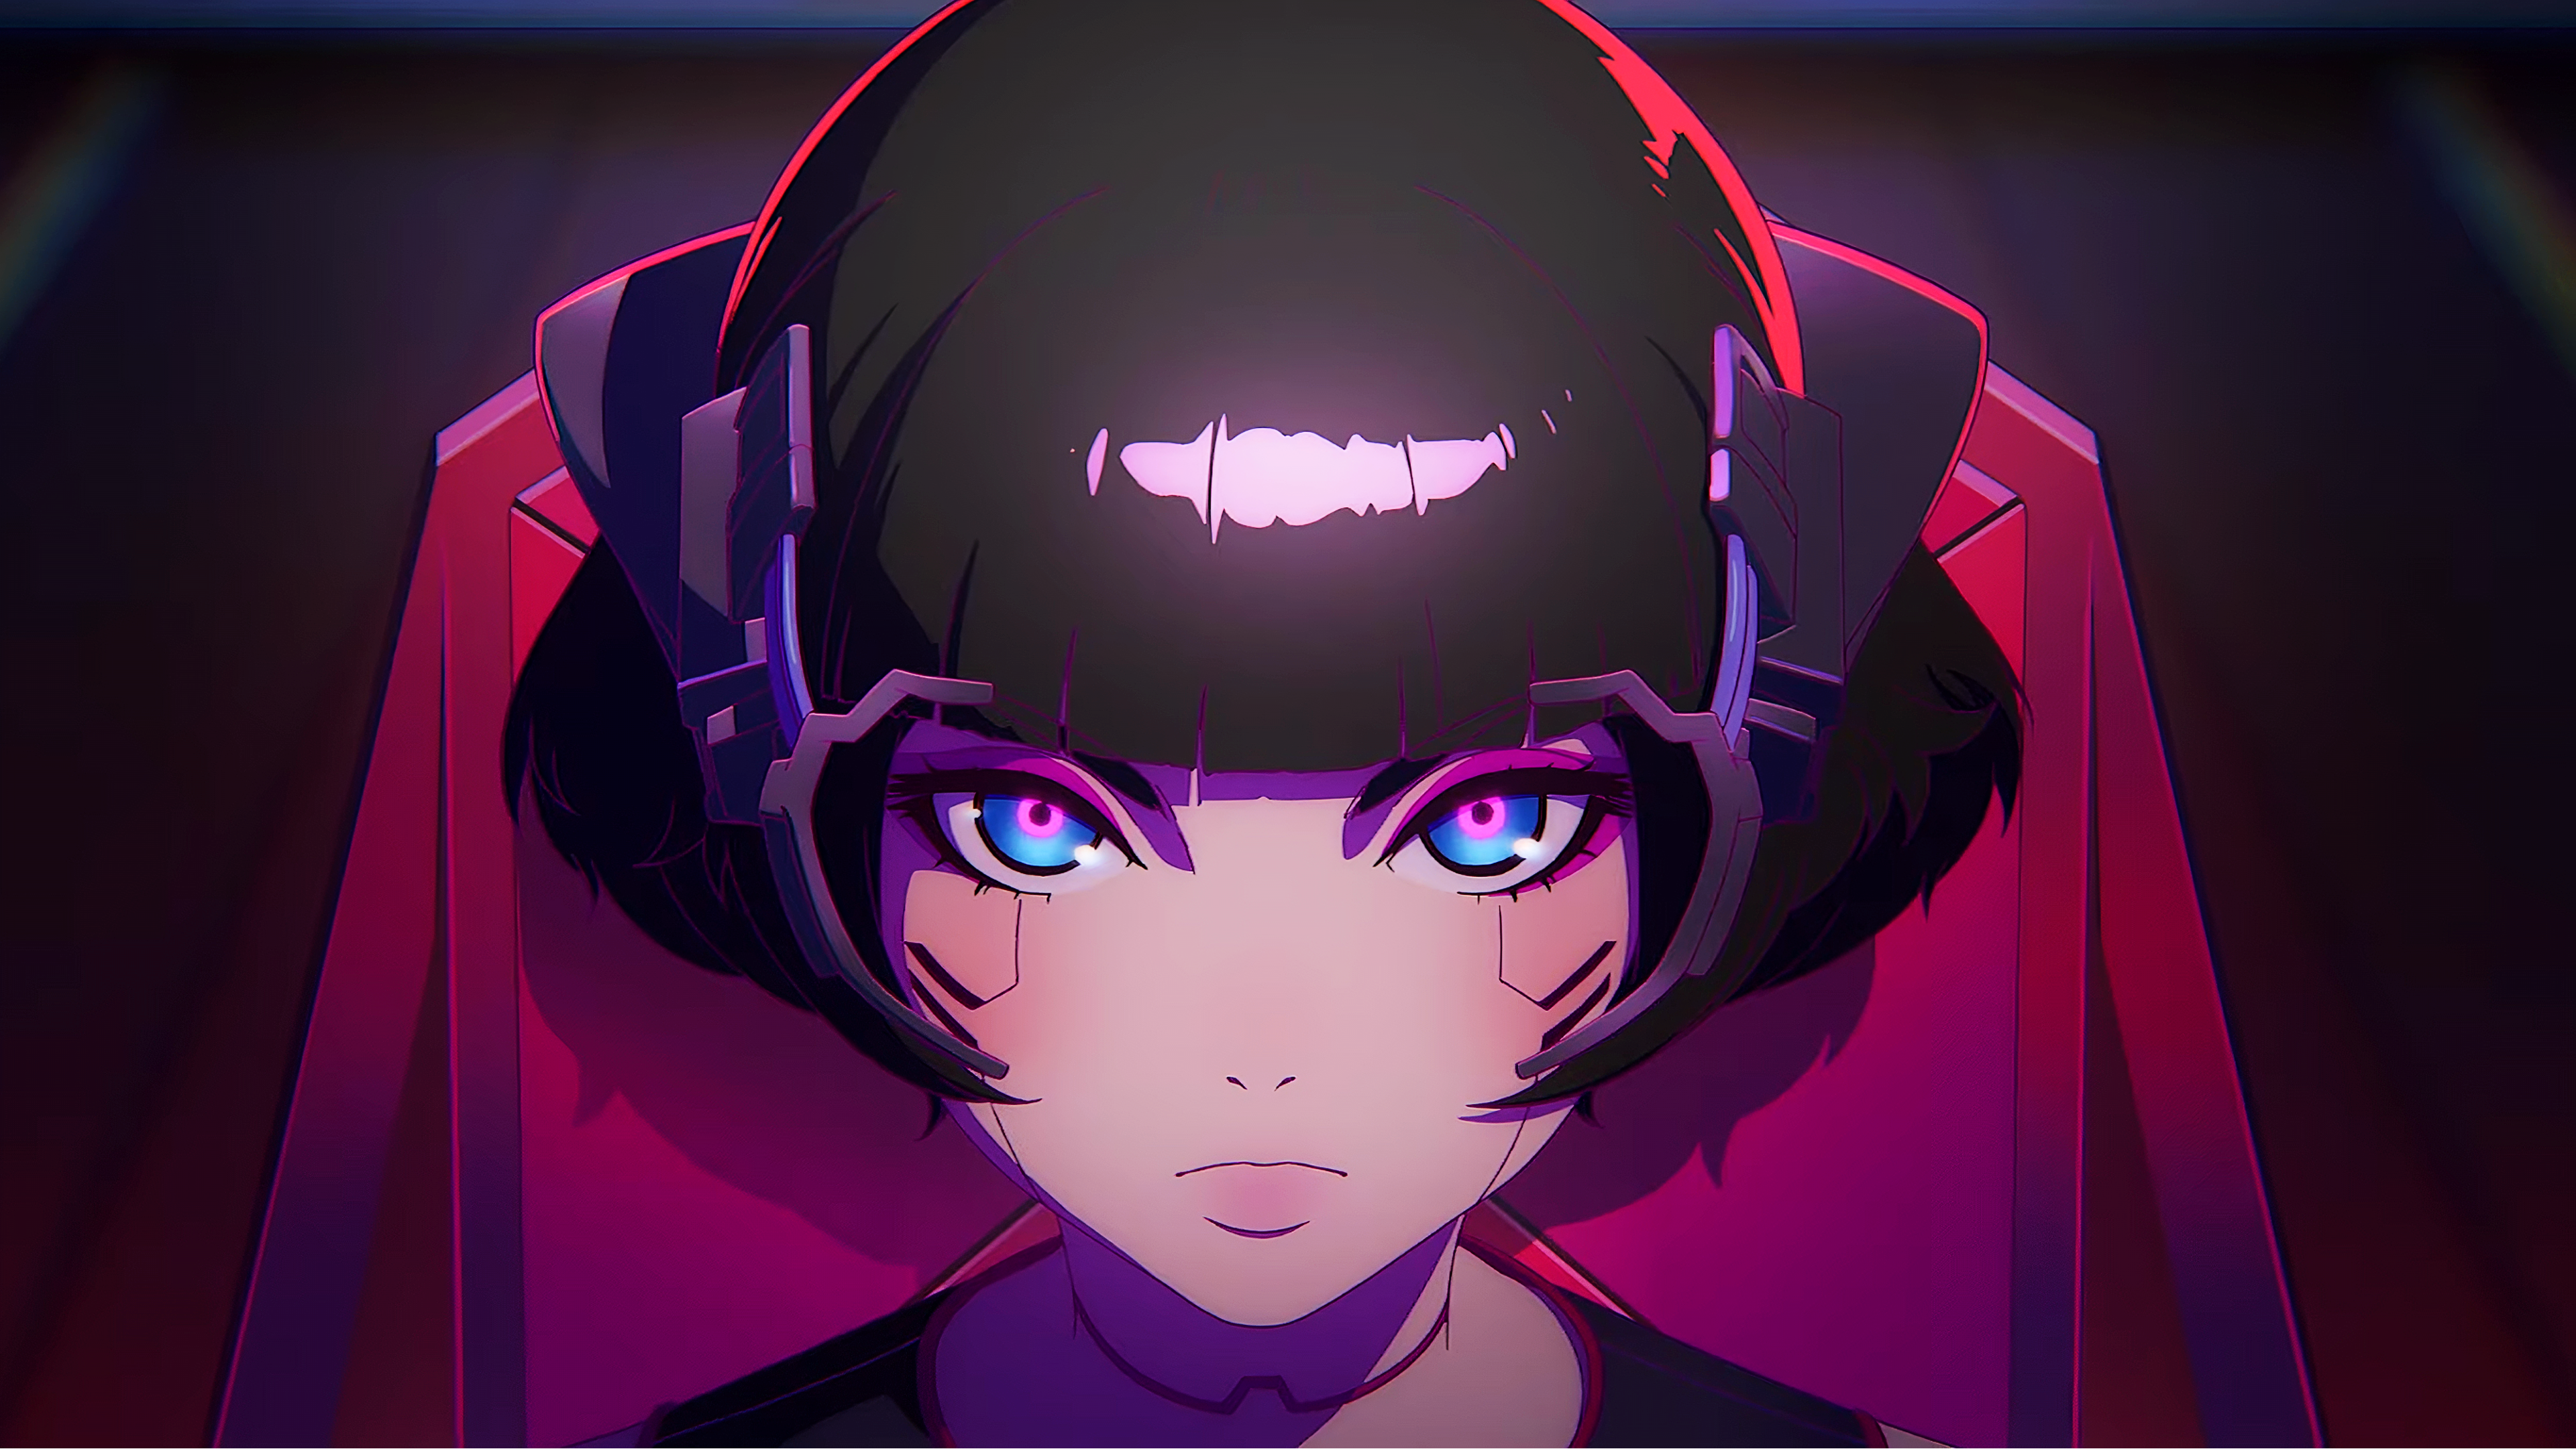 LoHa] Cyberpunk 2077 Anime Style (With multires noise version) - LoHa v1.0  | Stable Diffusion LyCORIS | Civitai